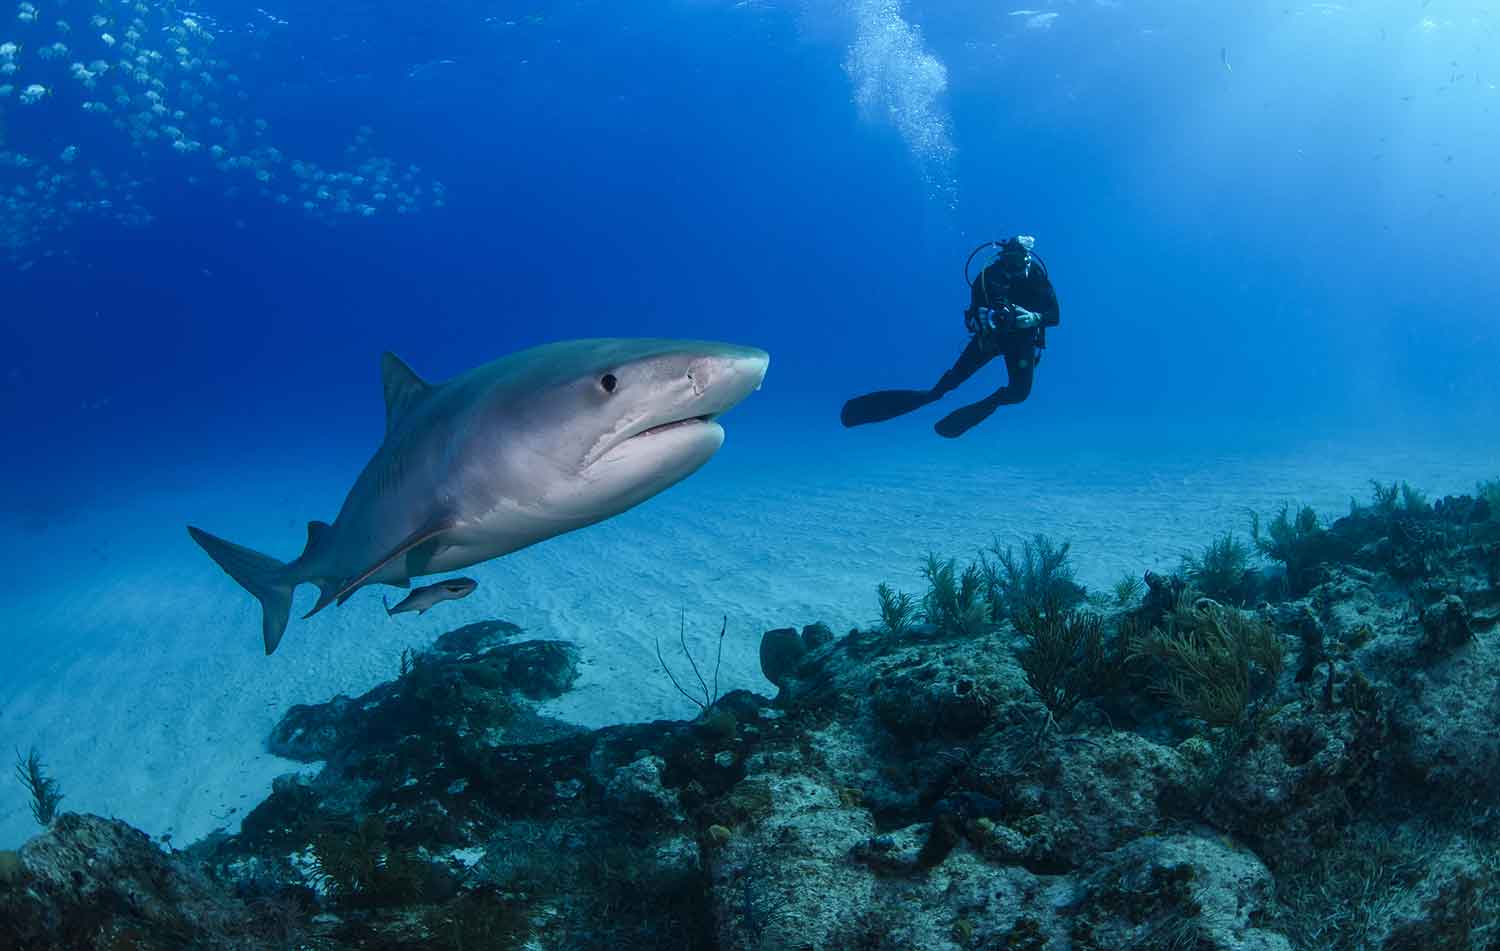 A diver in scuba gear swims alongside a tiger shark.